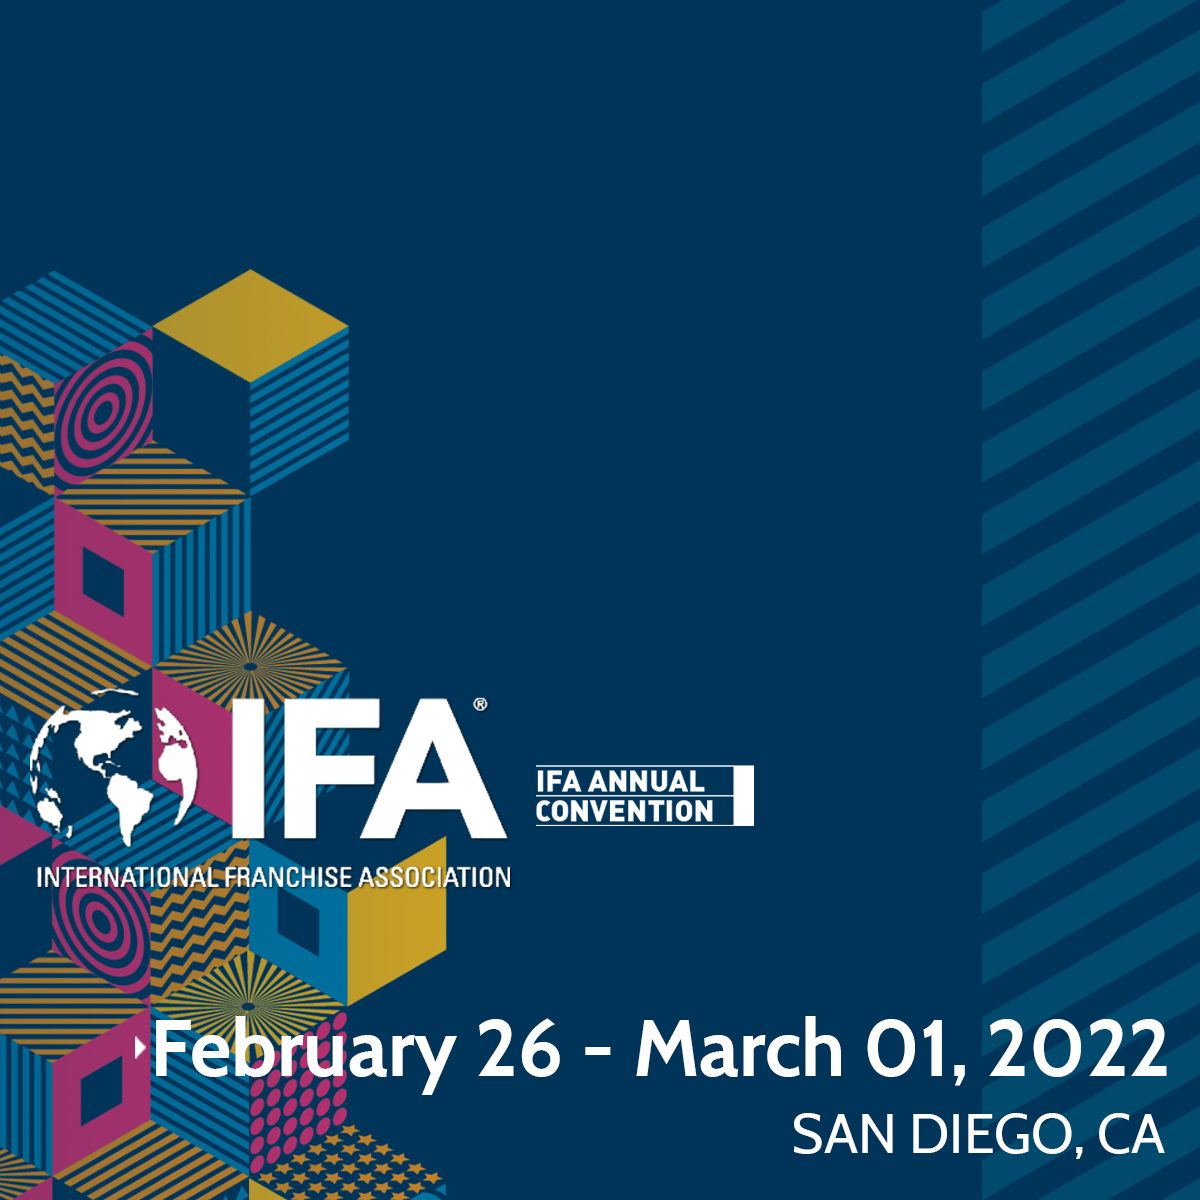 IFA 2022 Annual Convention